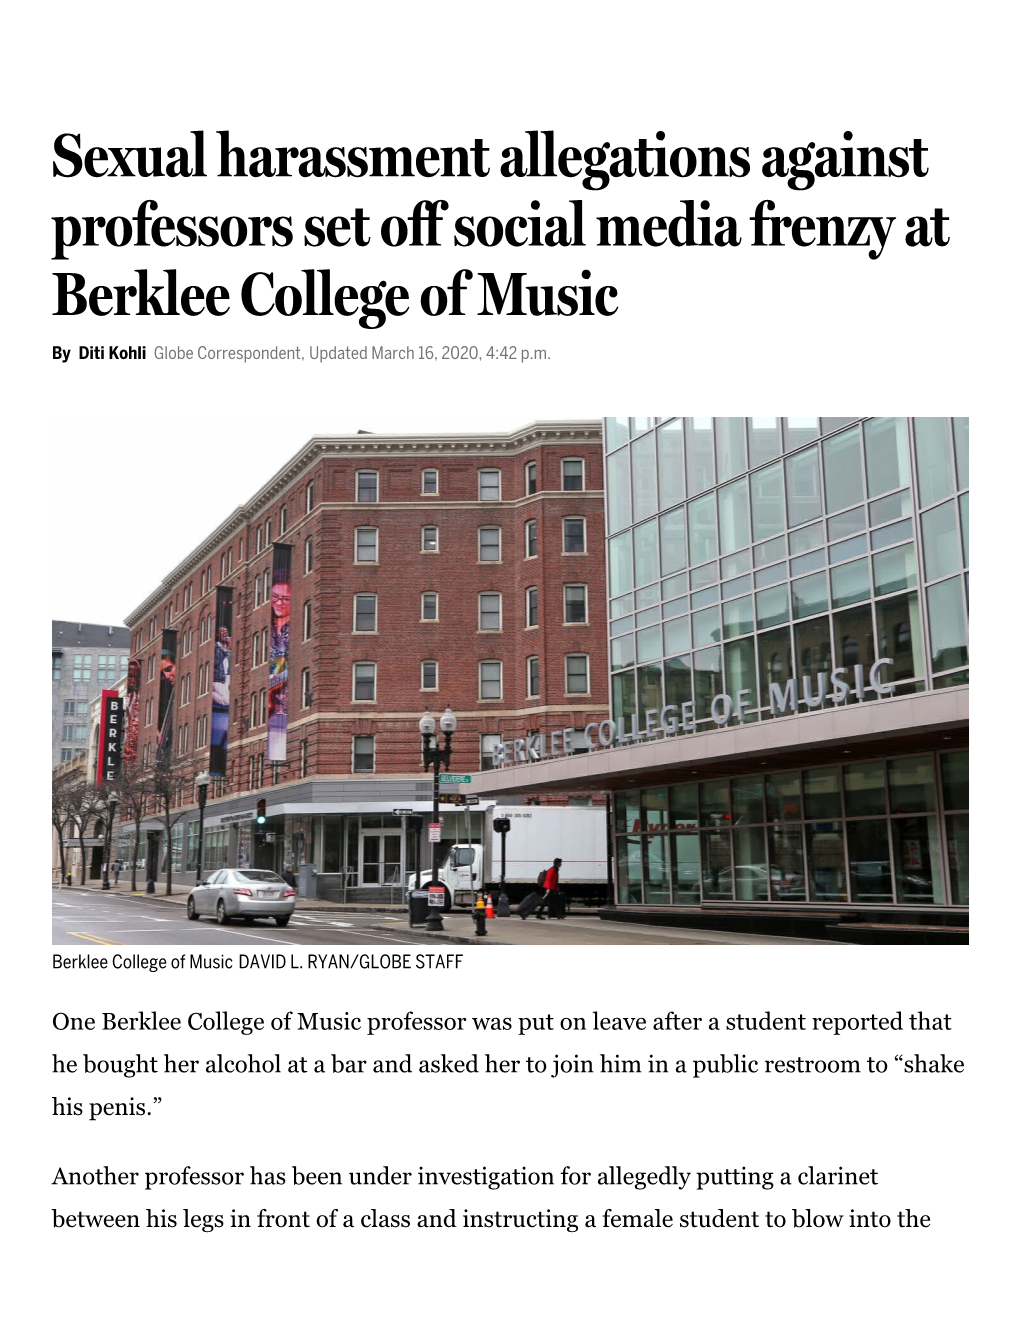 Social Media Frenzy at Berklee College of Music